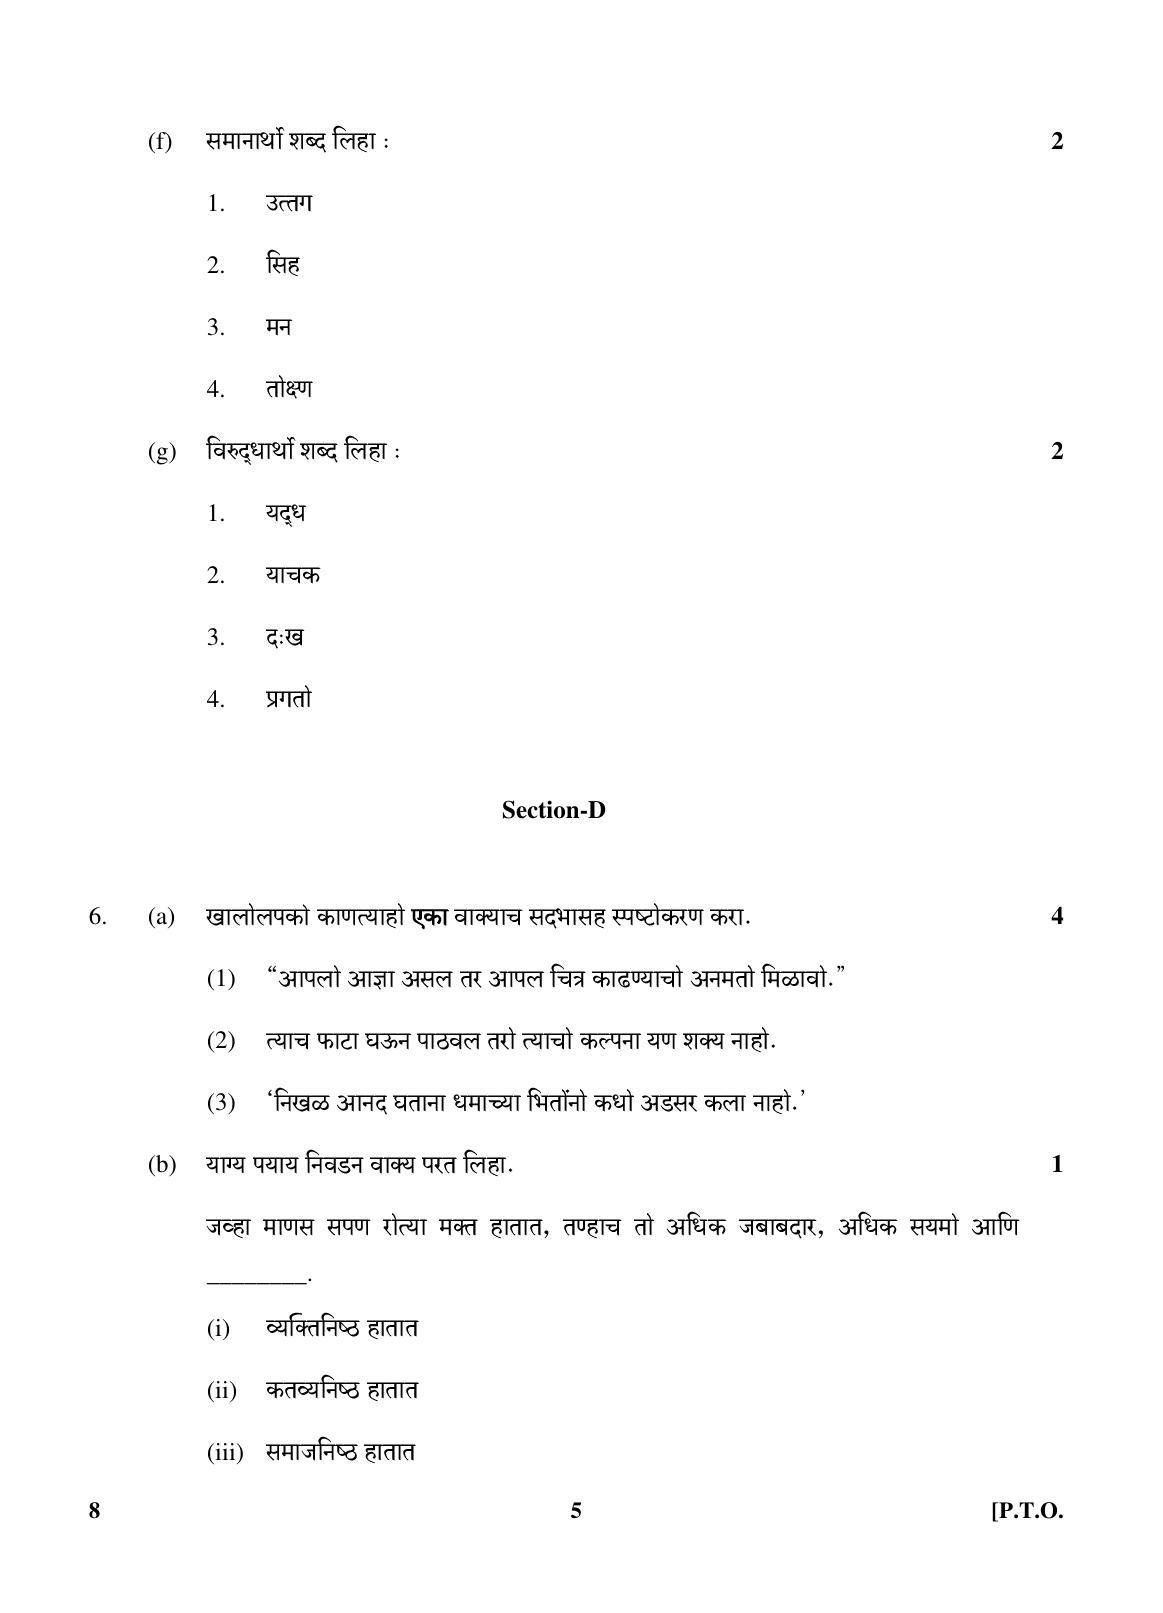 CBSE Class 10 8 (Marathi) 2018 Question Paper - Page 5